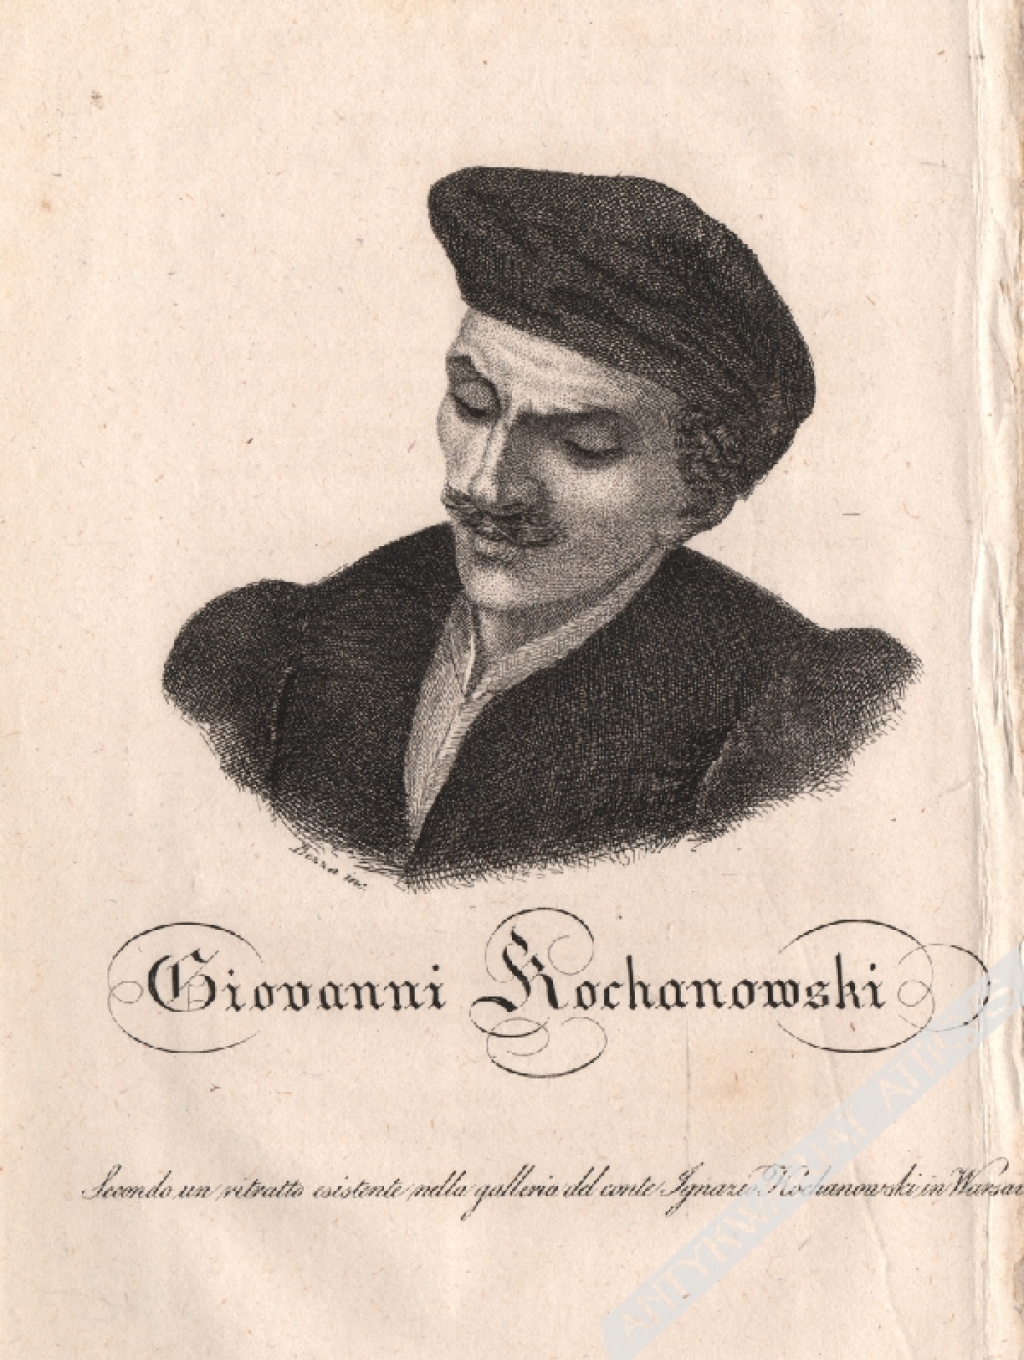 [rycina, 1831 r.] Giovanni Kochanowski [Jan Kochanowski]